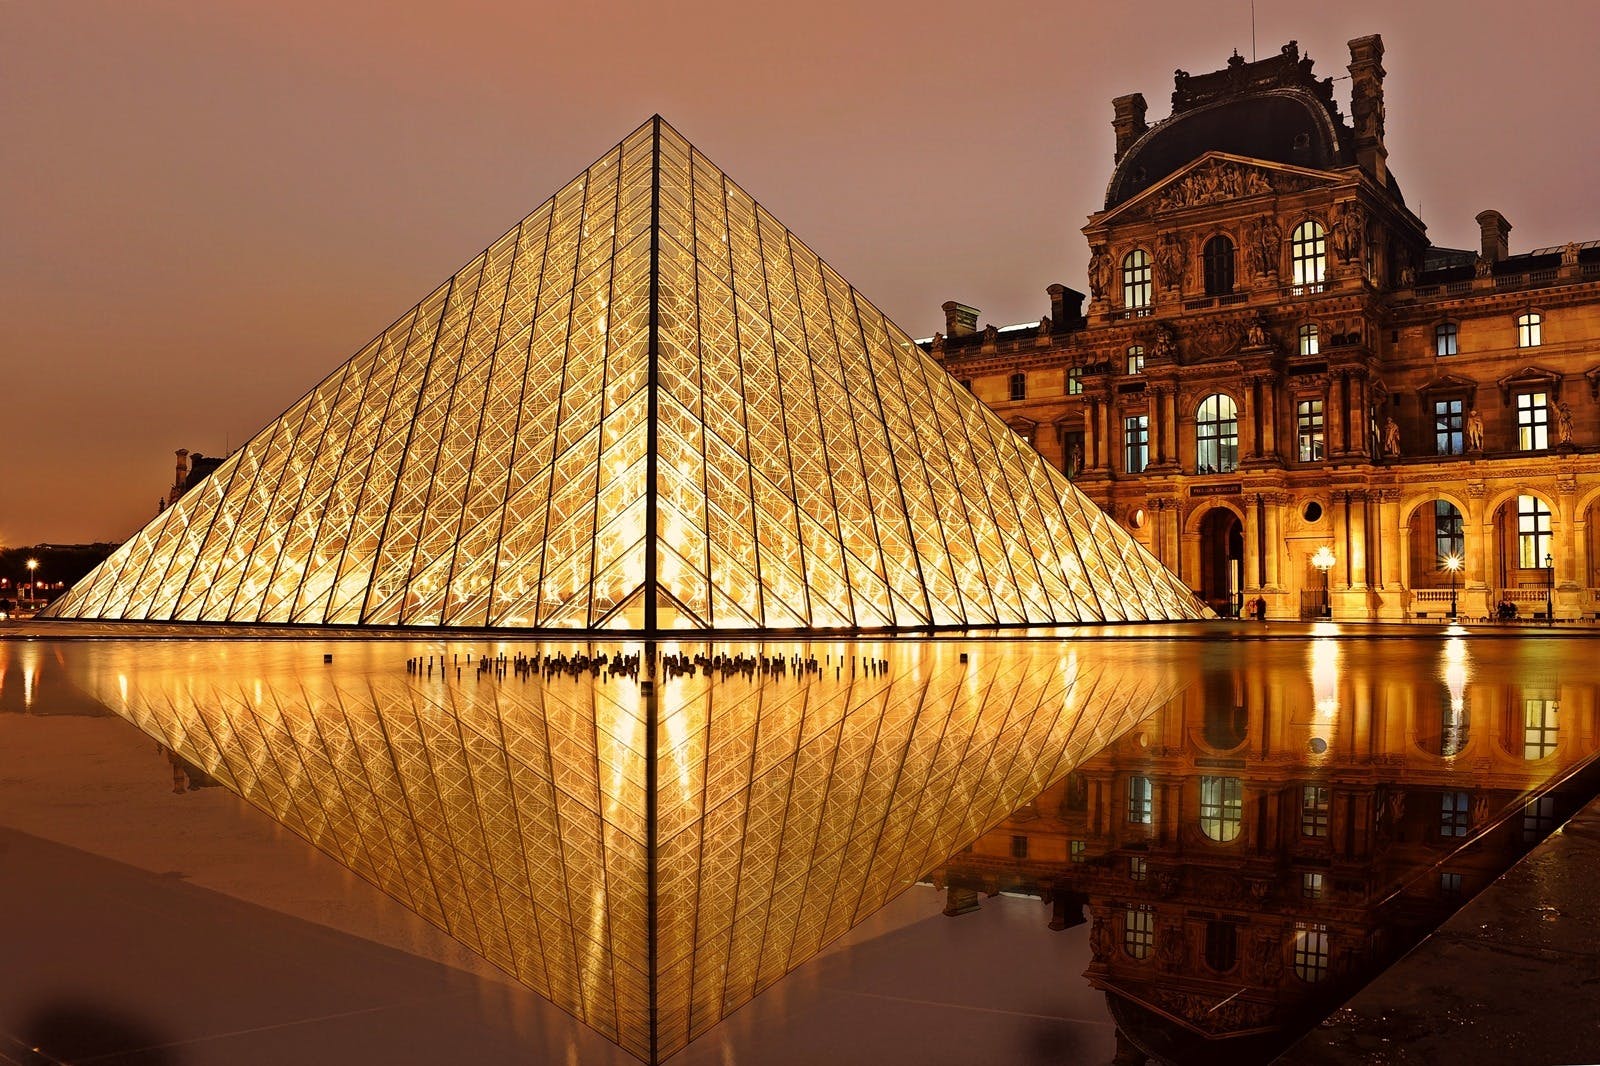 The illuminated pyramid at the Louvre museum in Paris